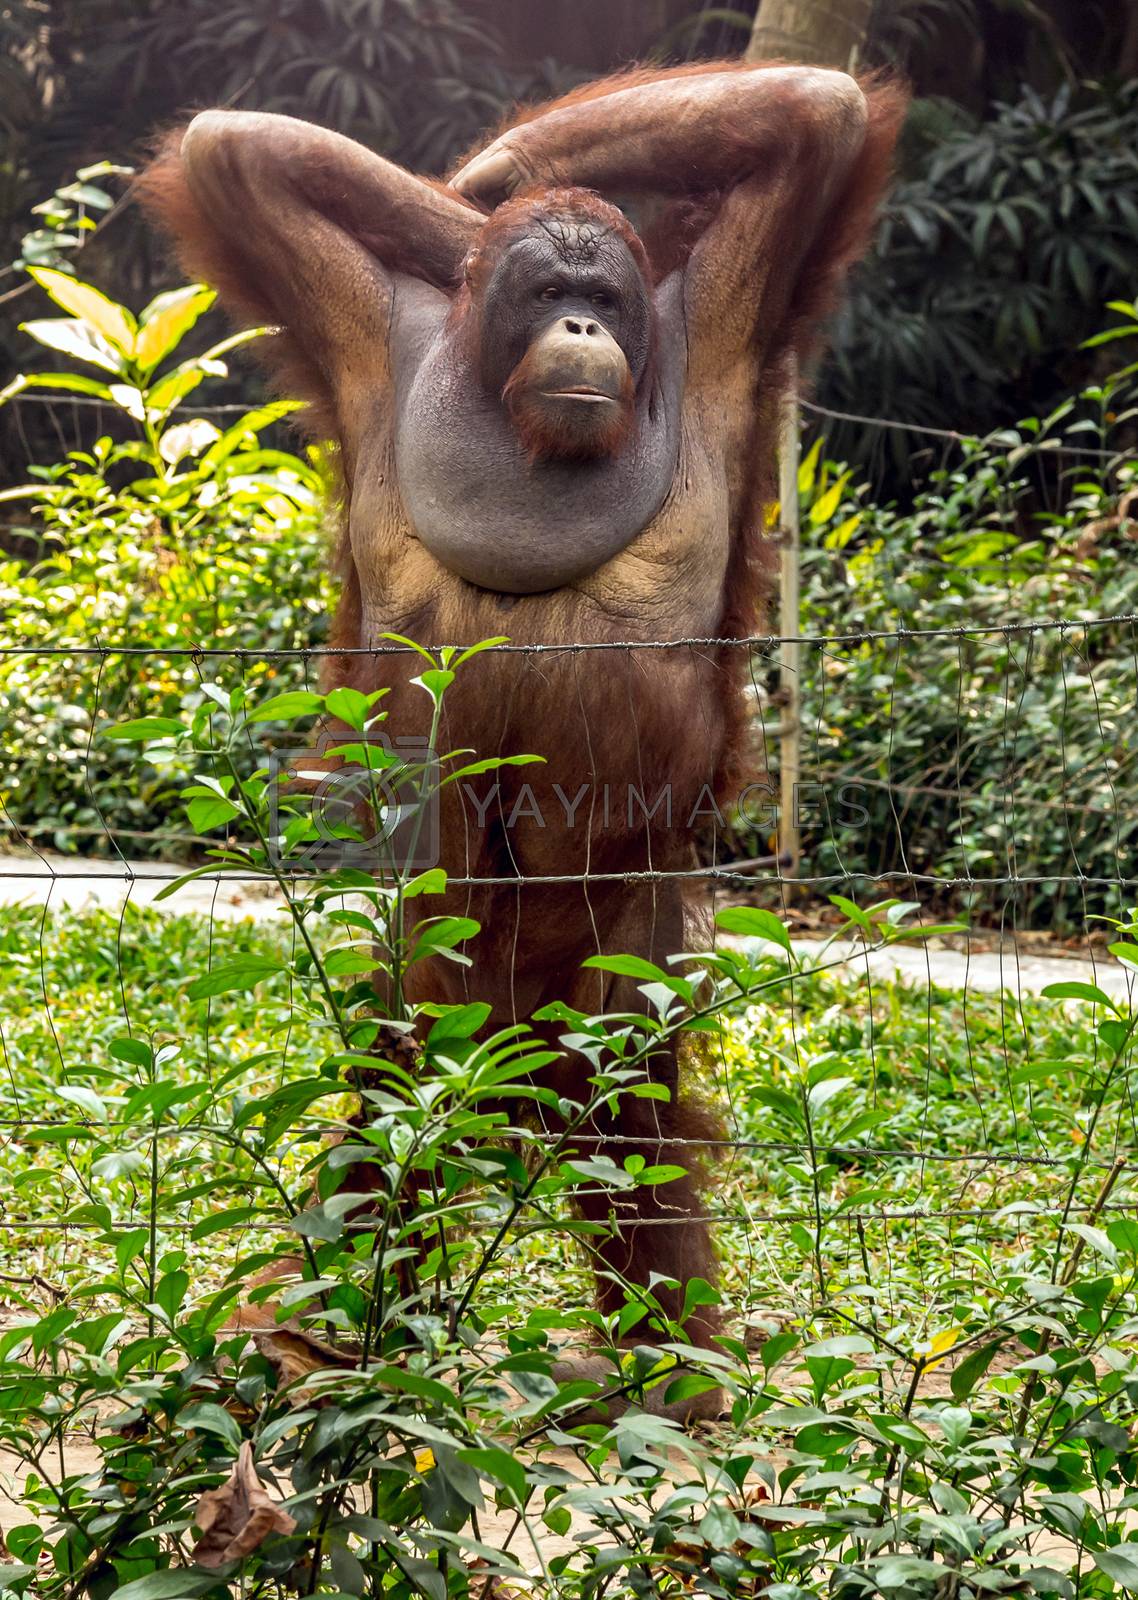 Royalty free image of Dominant male orangutan by Vladyslav